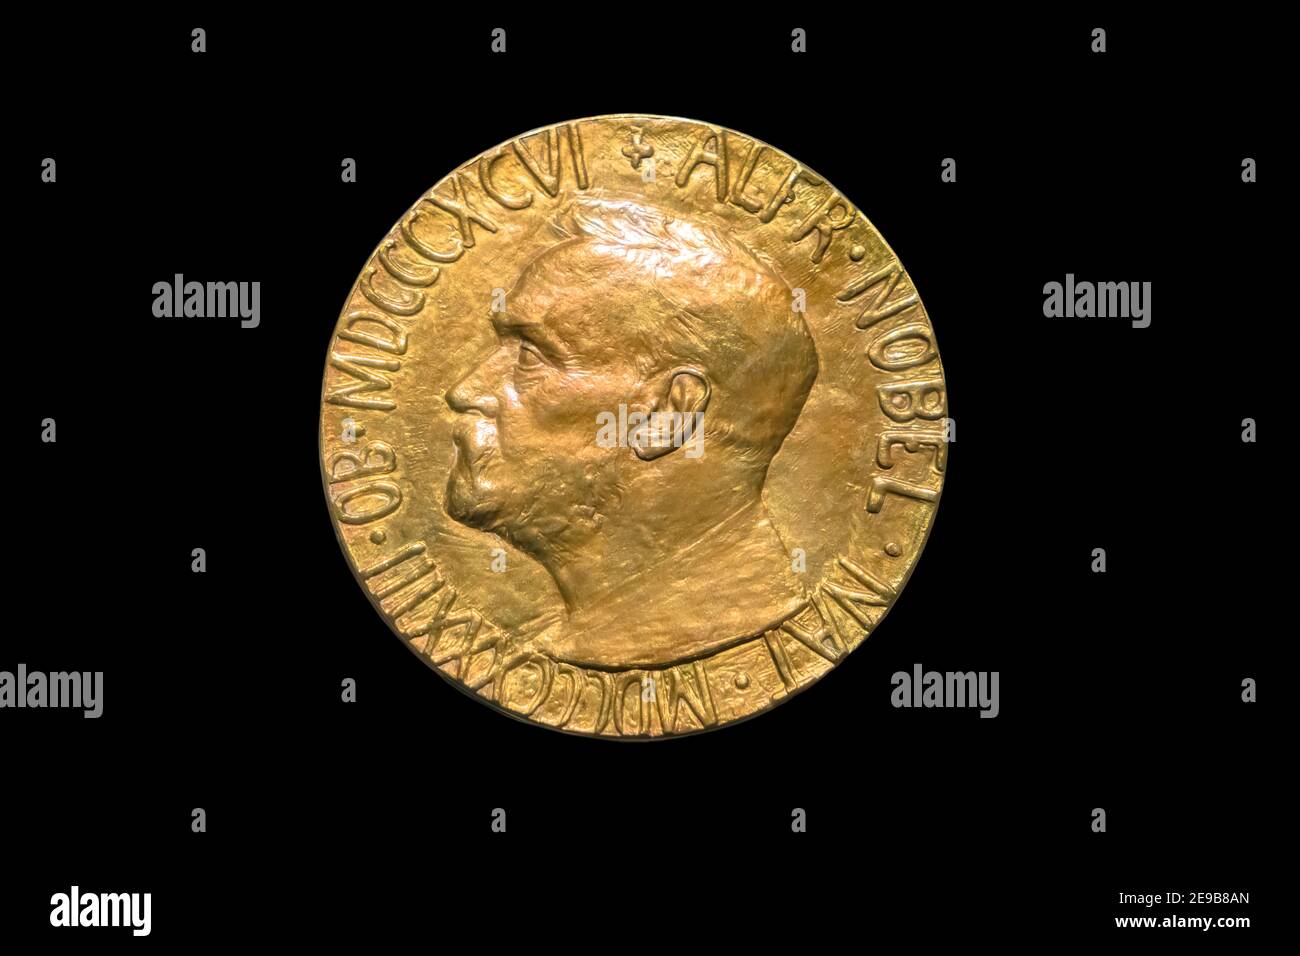 Nobel Peace Prize Medal on black background Stock Photo